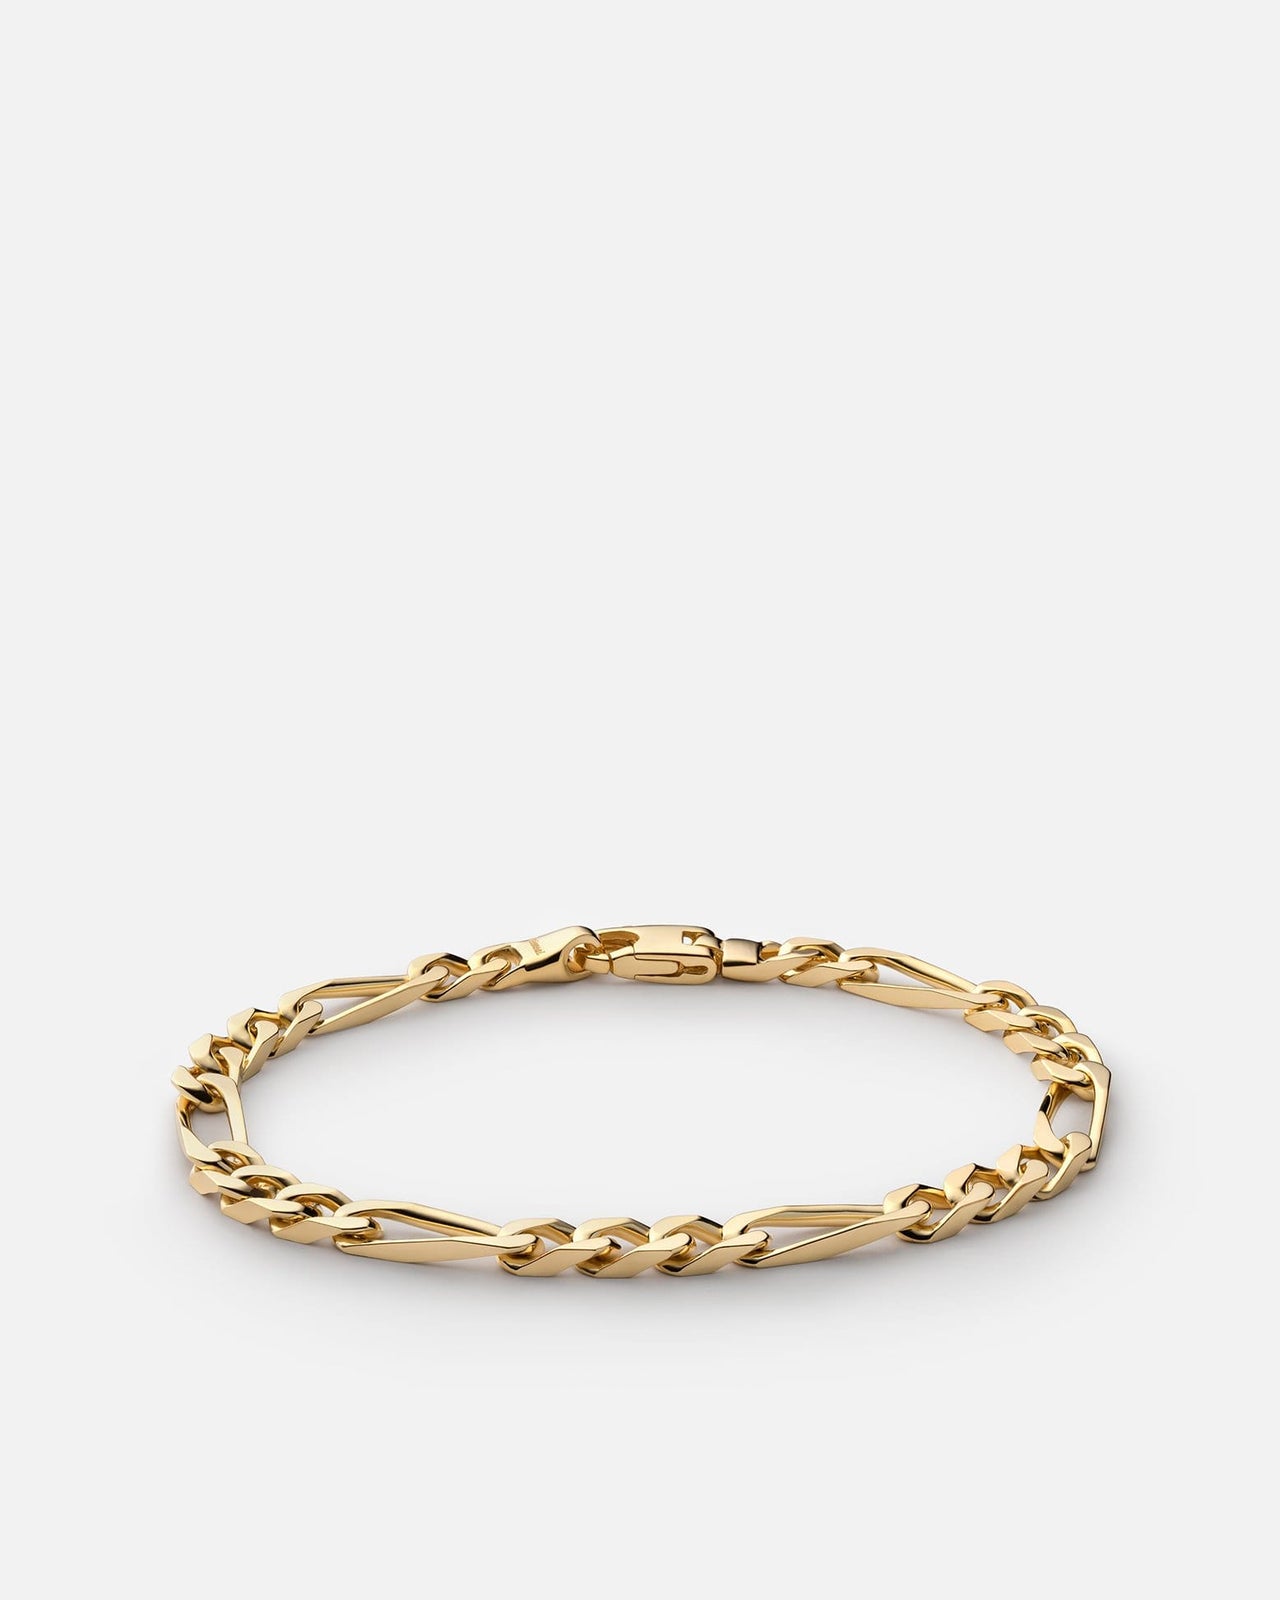 Miansai Men's 5mm Figaro Chain Bracelet, Gold Vermeil, Size M